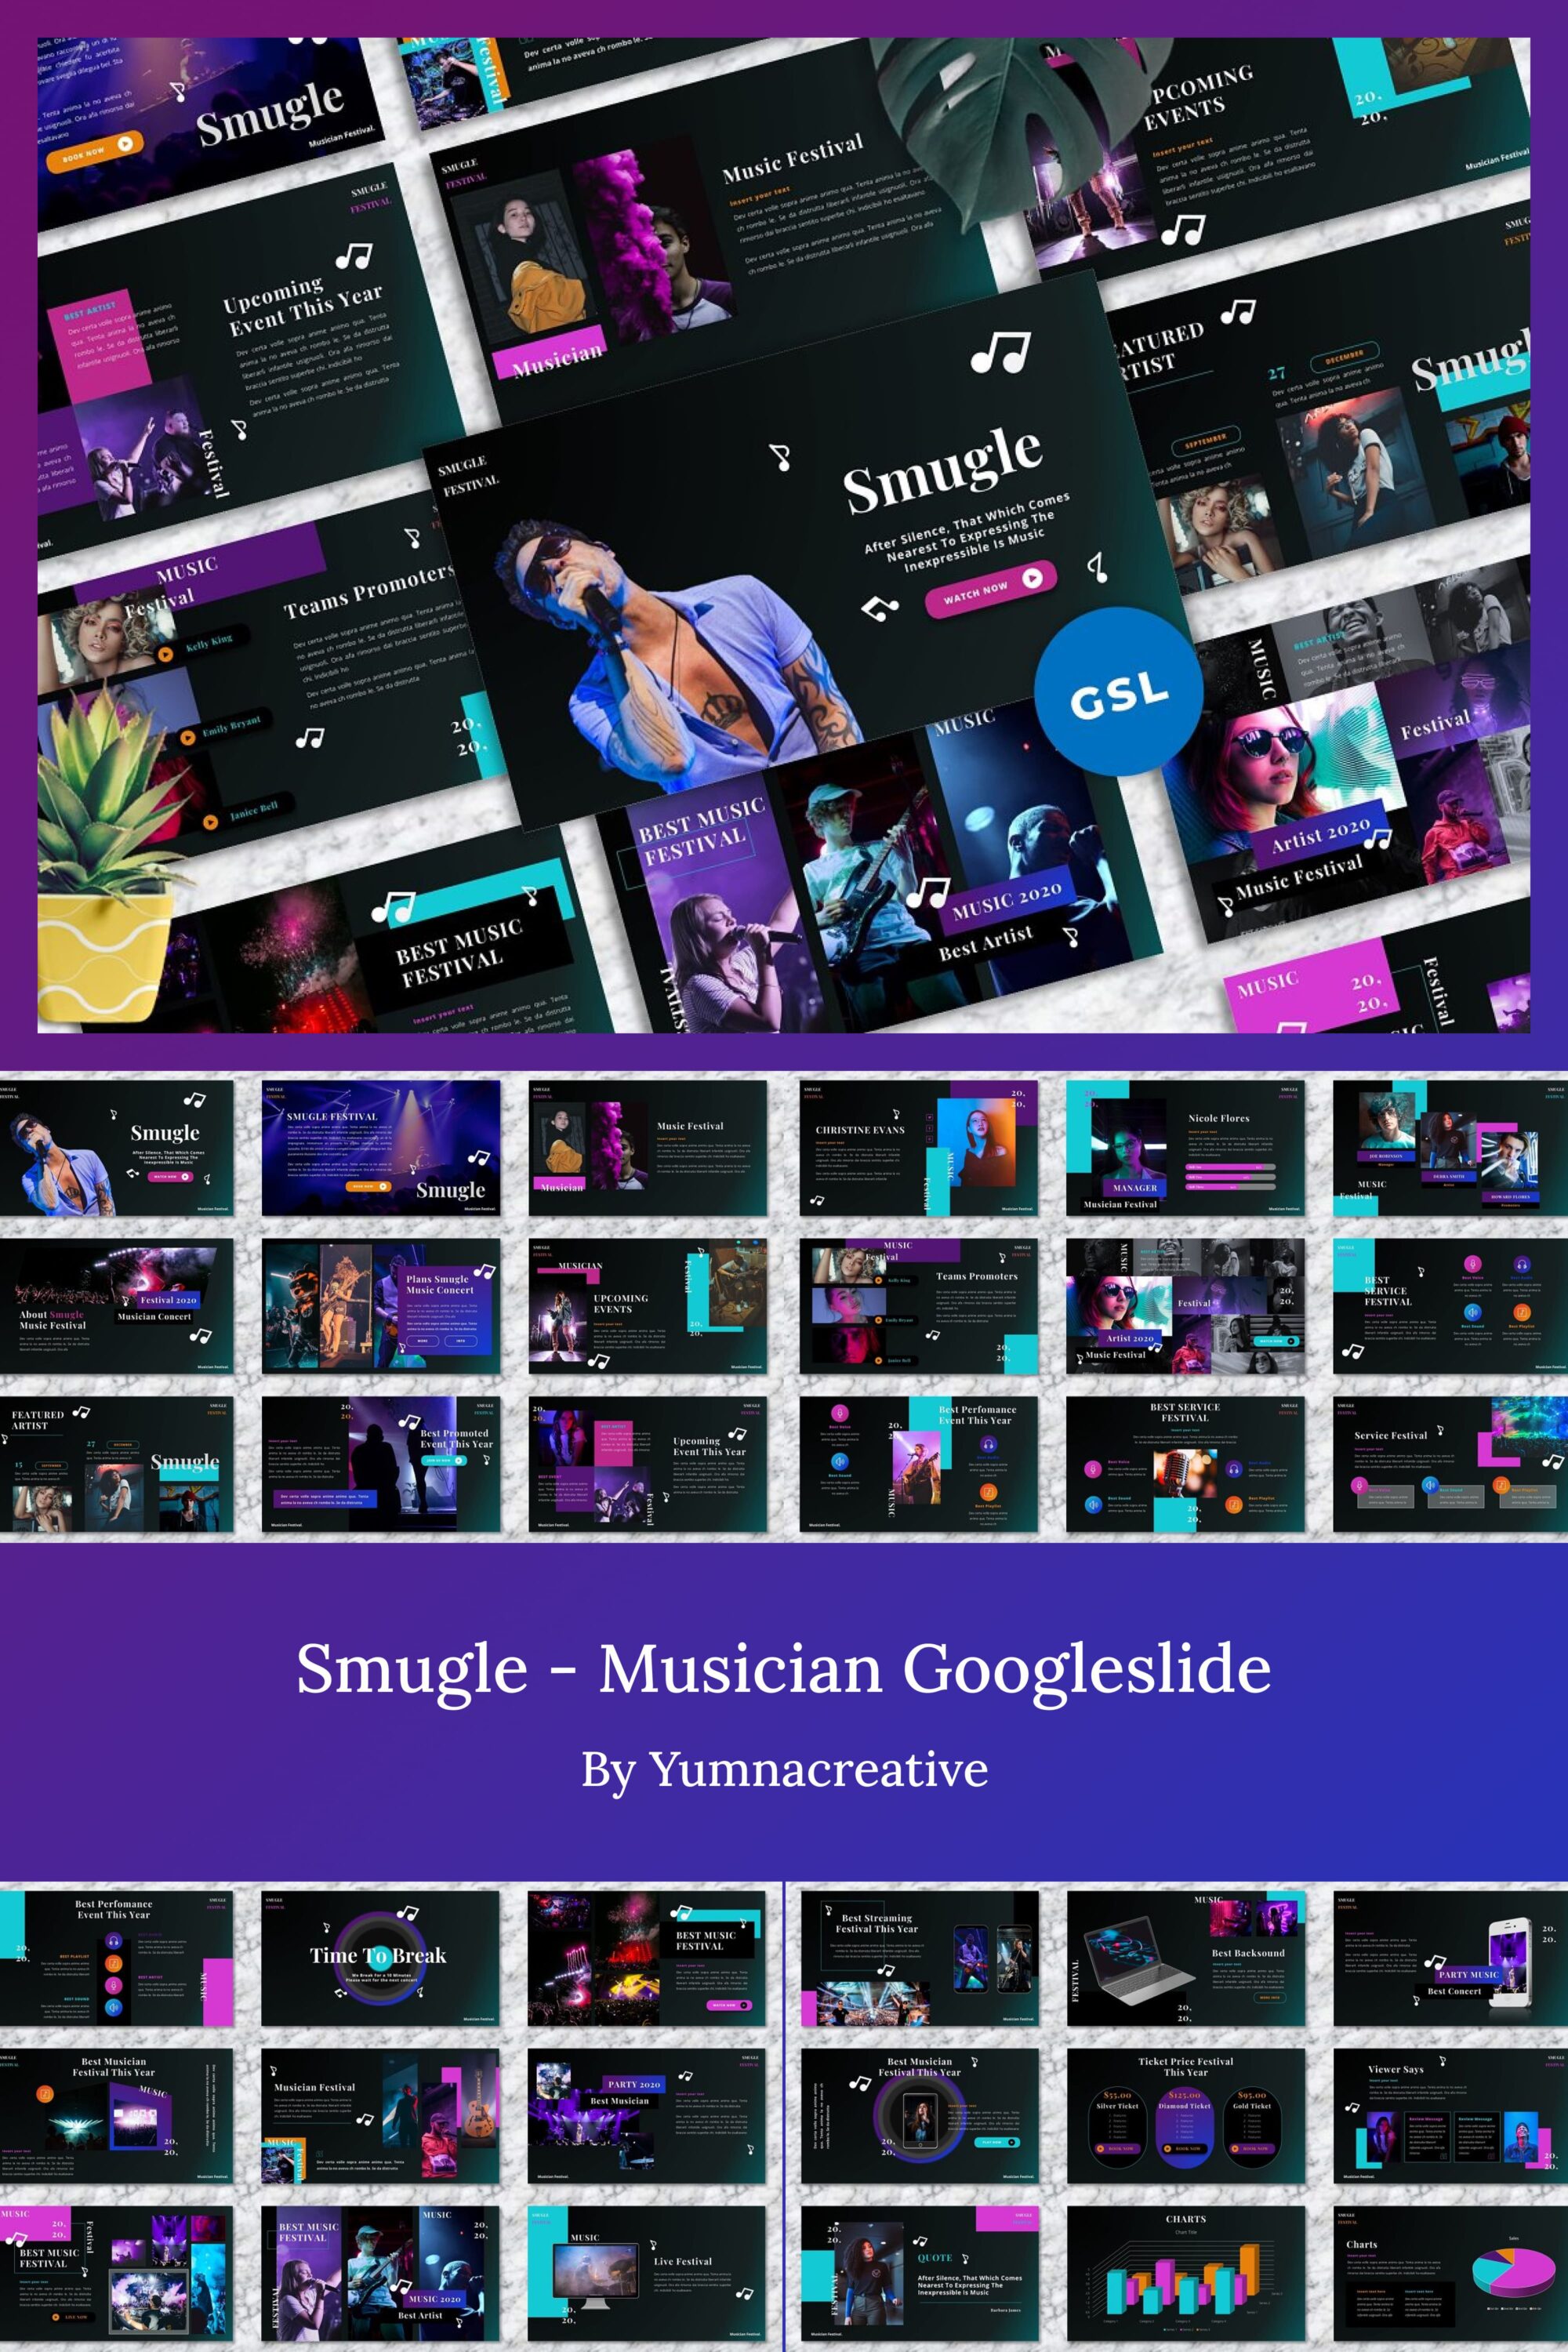 Smugle Musician Google Slide - pinterest image preview.